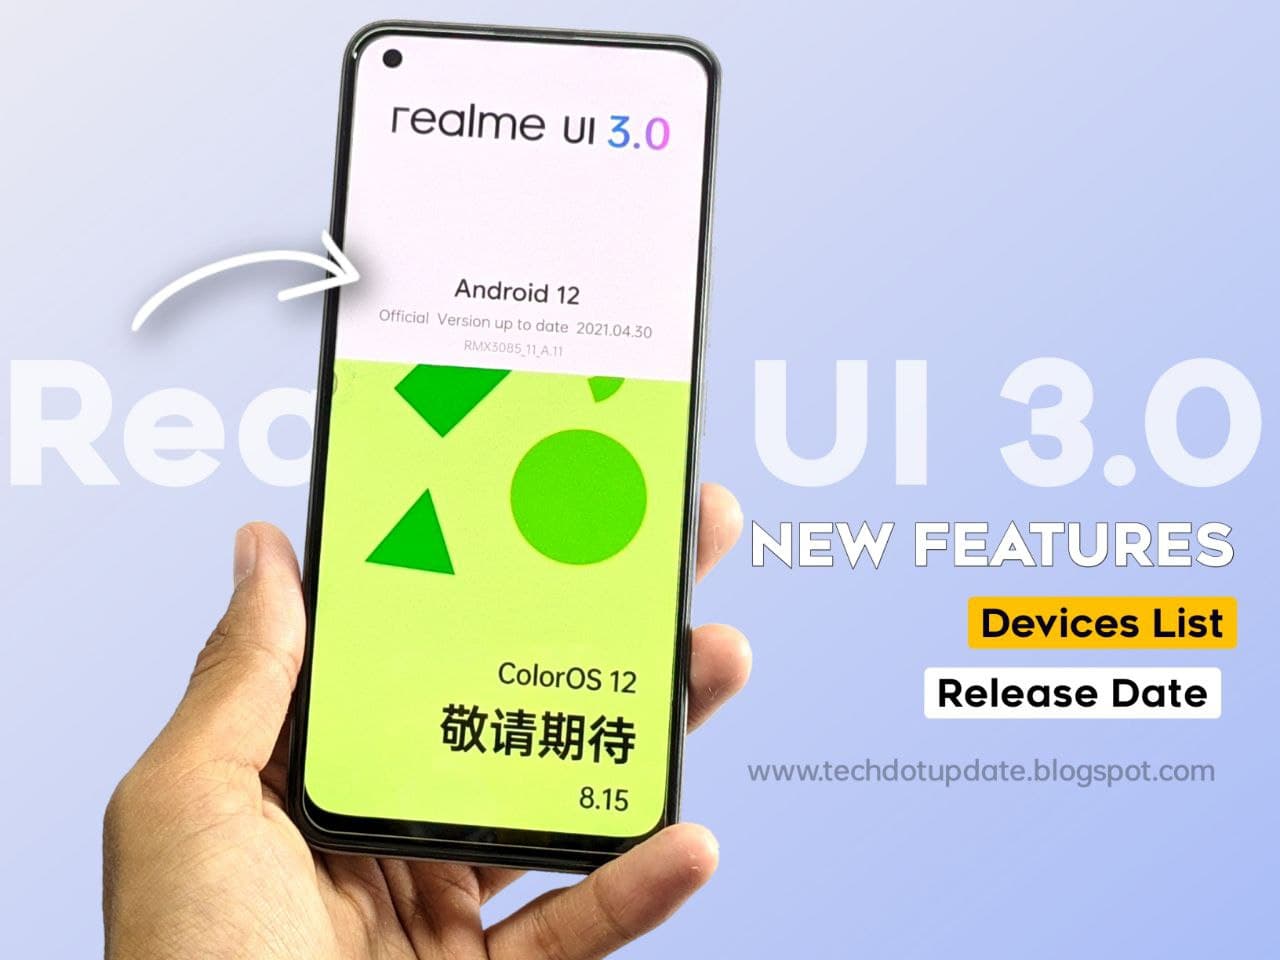 Release device. Realme UI 3.0 device list.